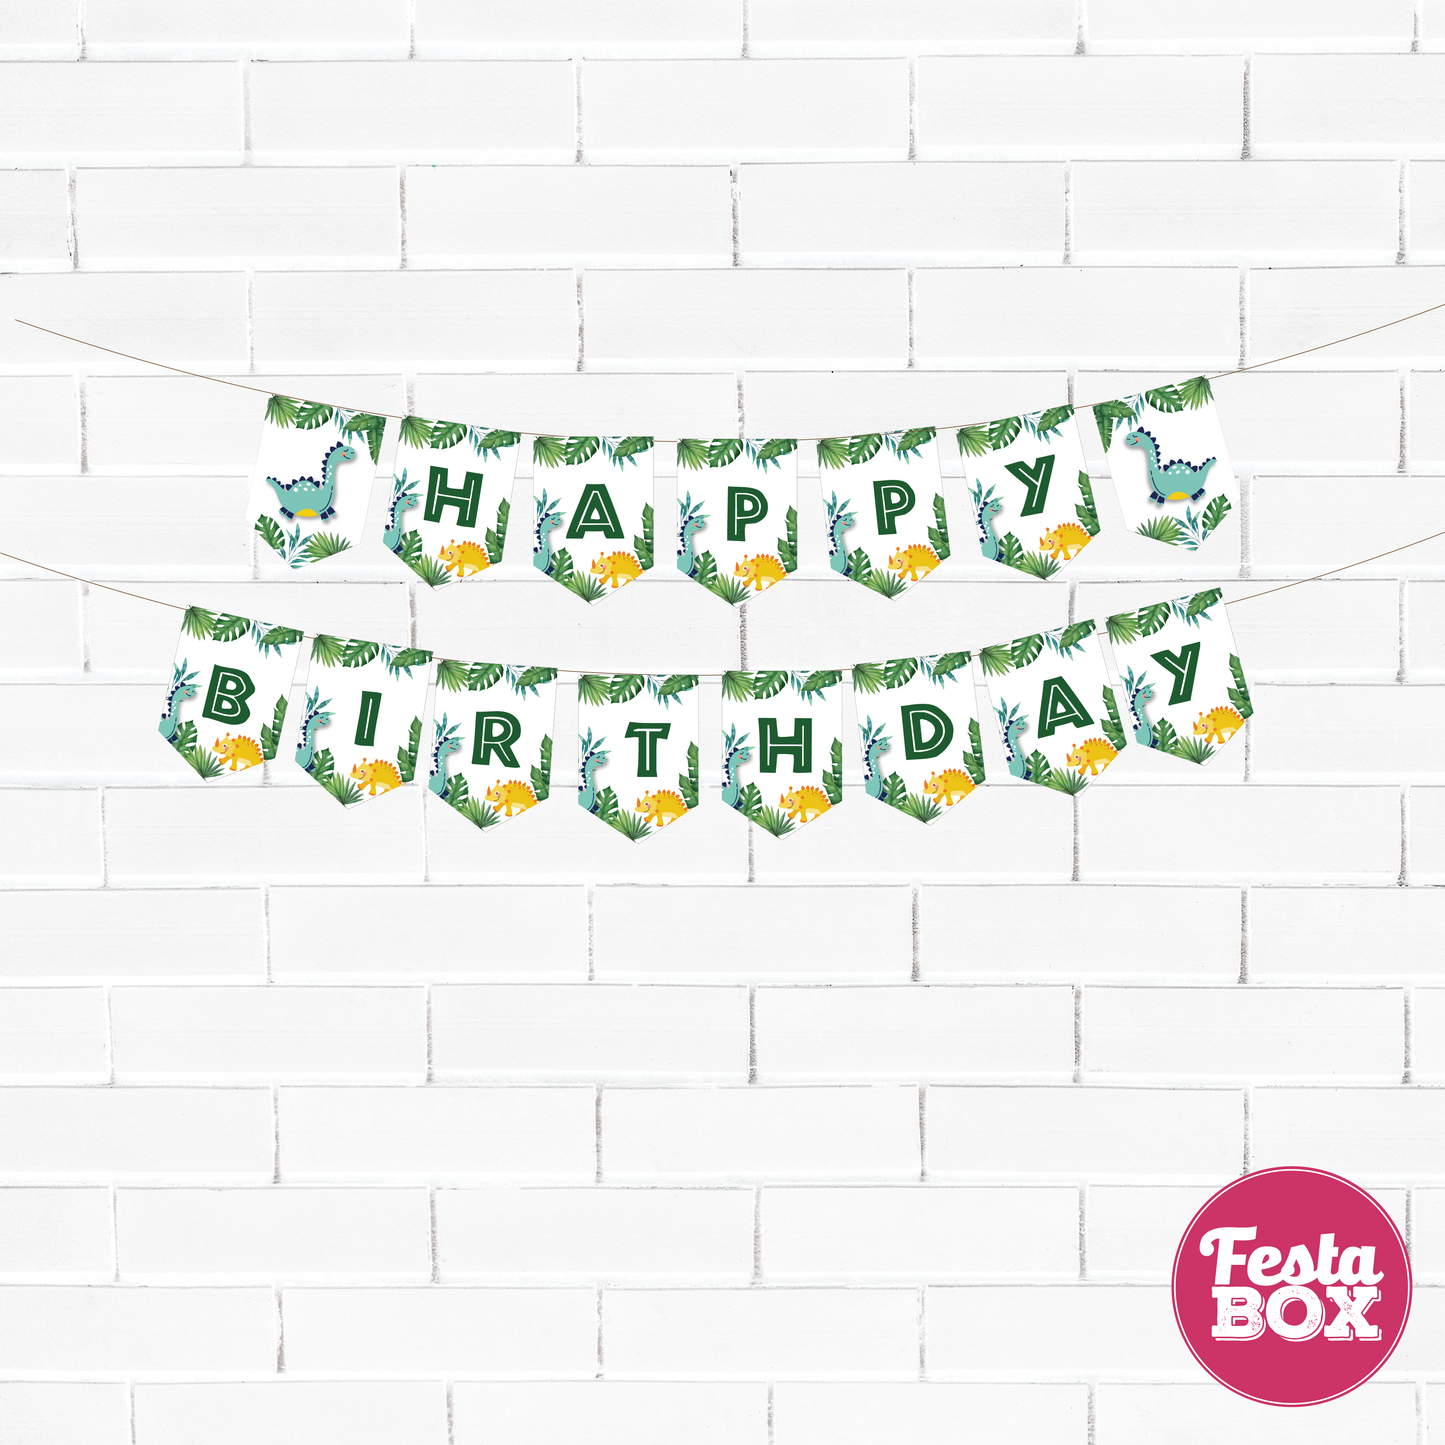 Happy birthday banner - dinosaur theme 